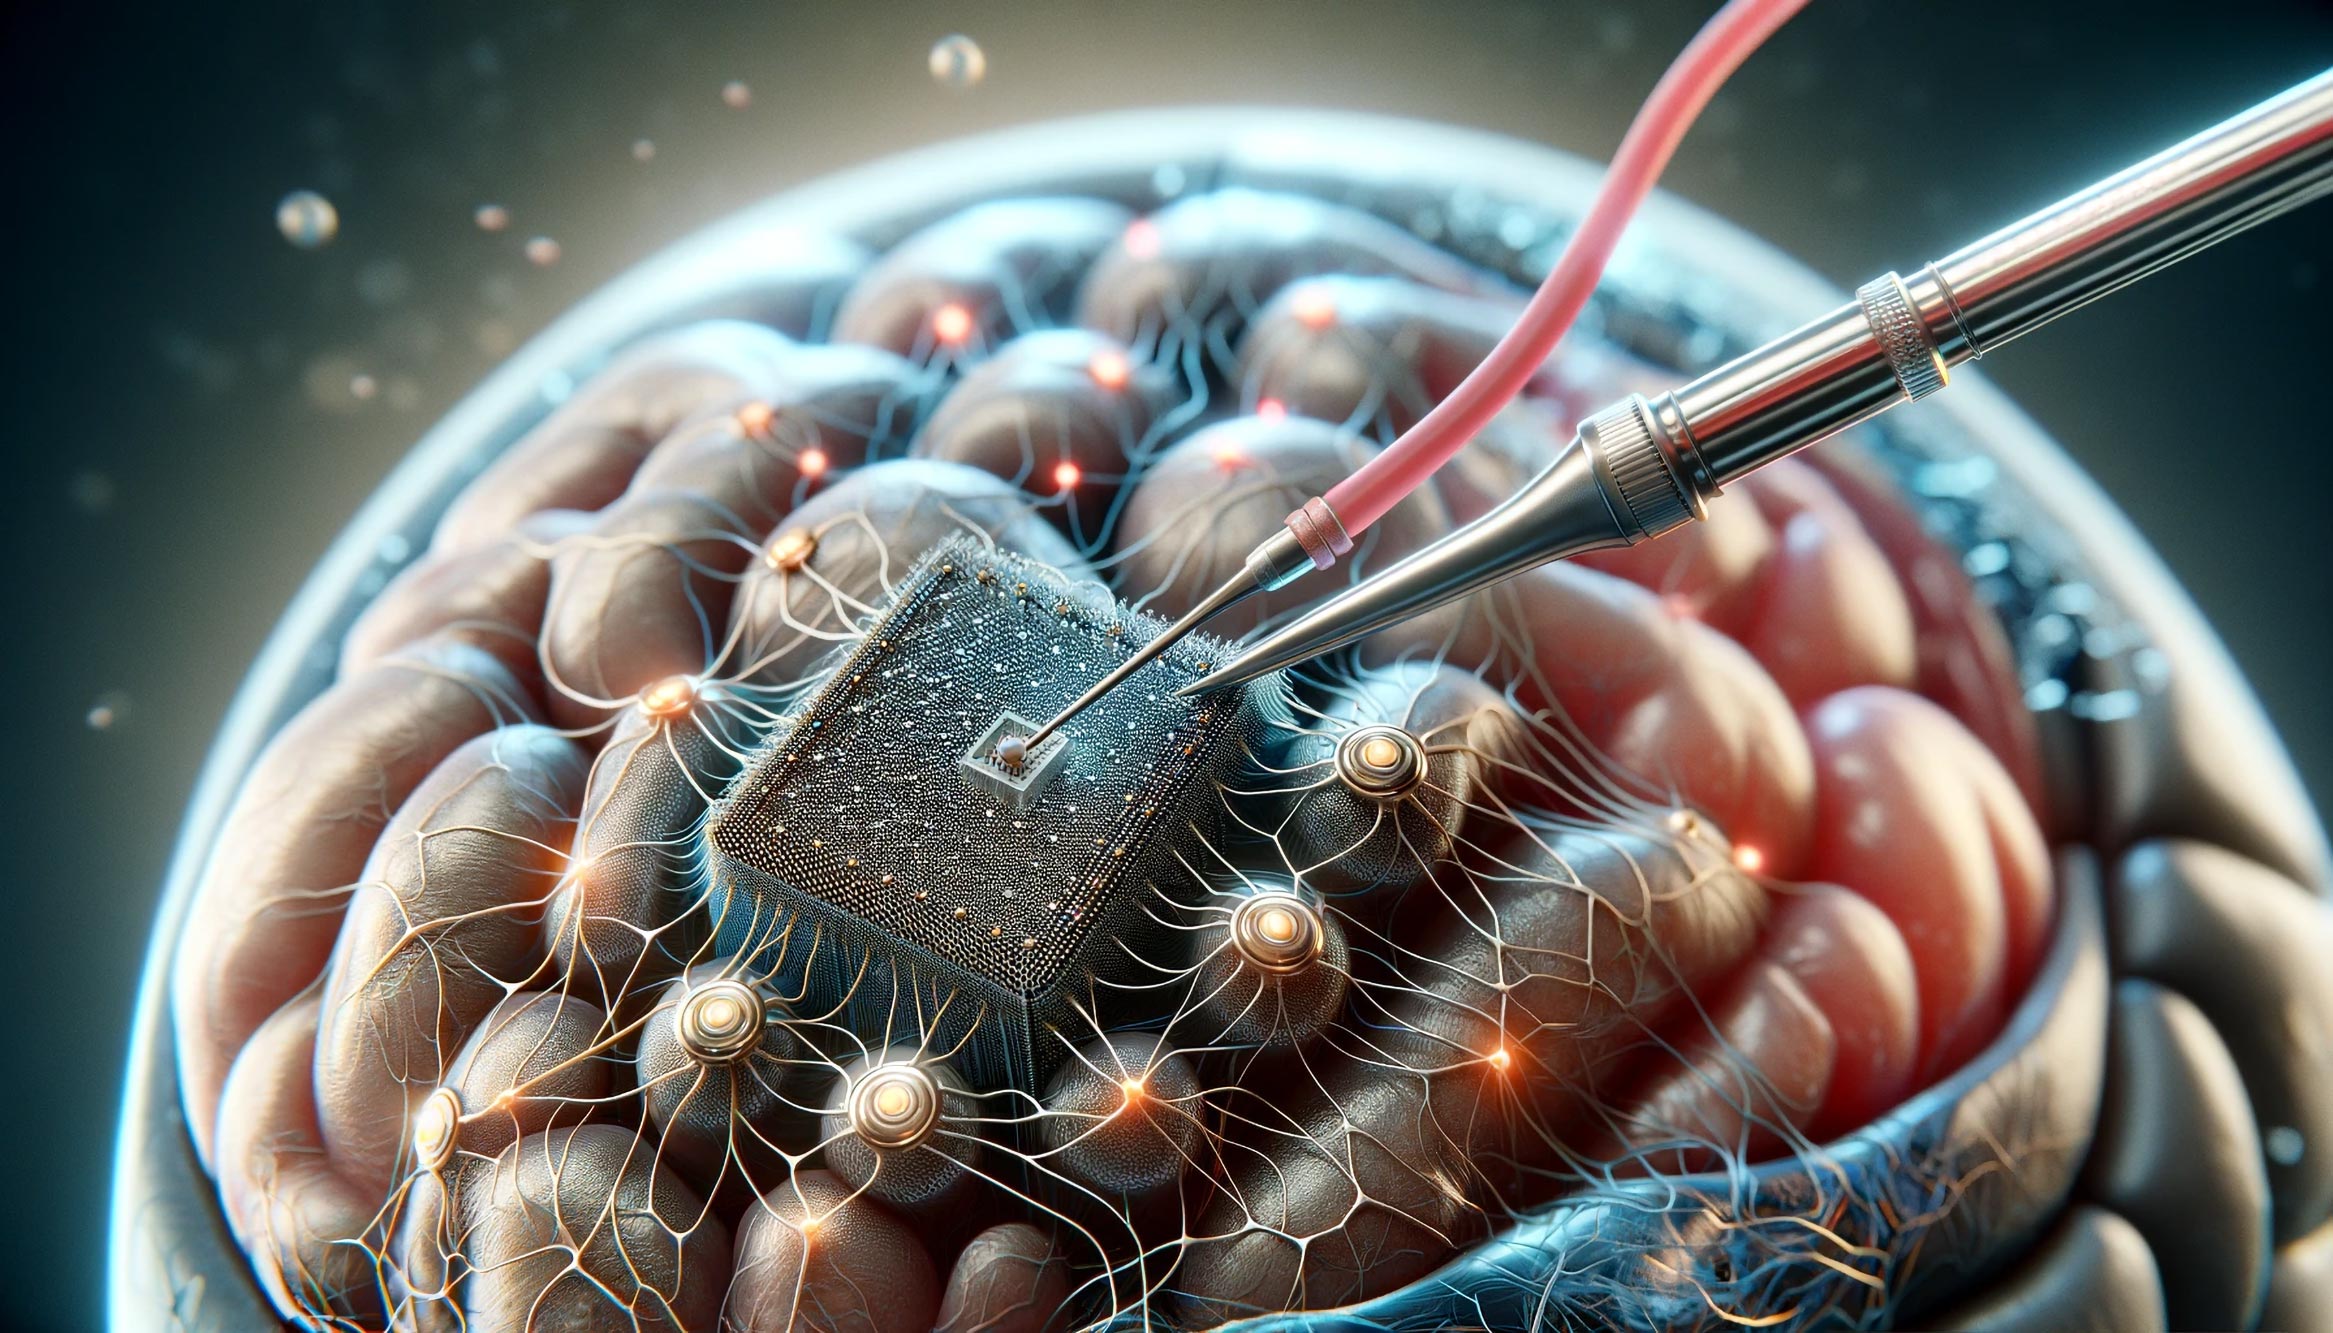 Revolutionary graphene interfaces aim to transform neuroscience